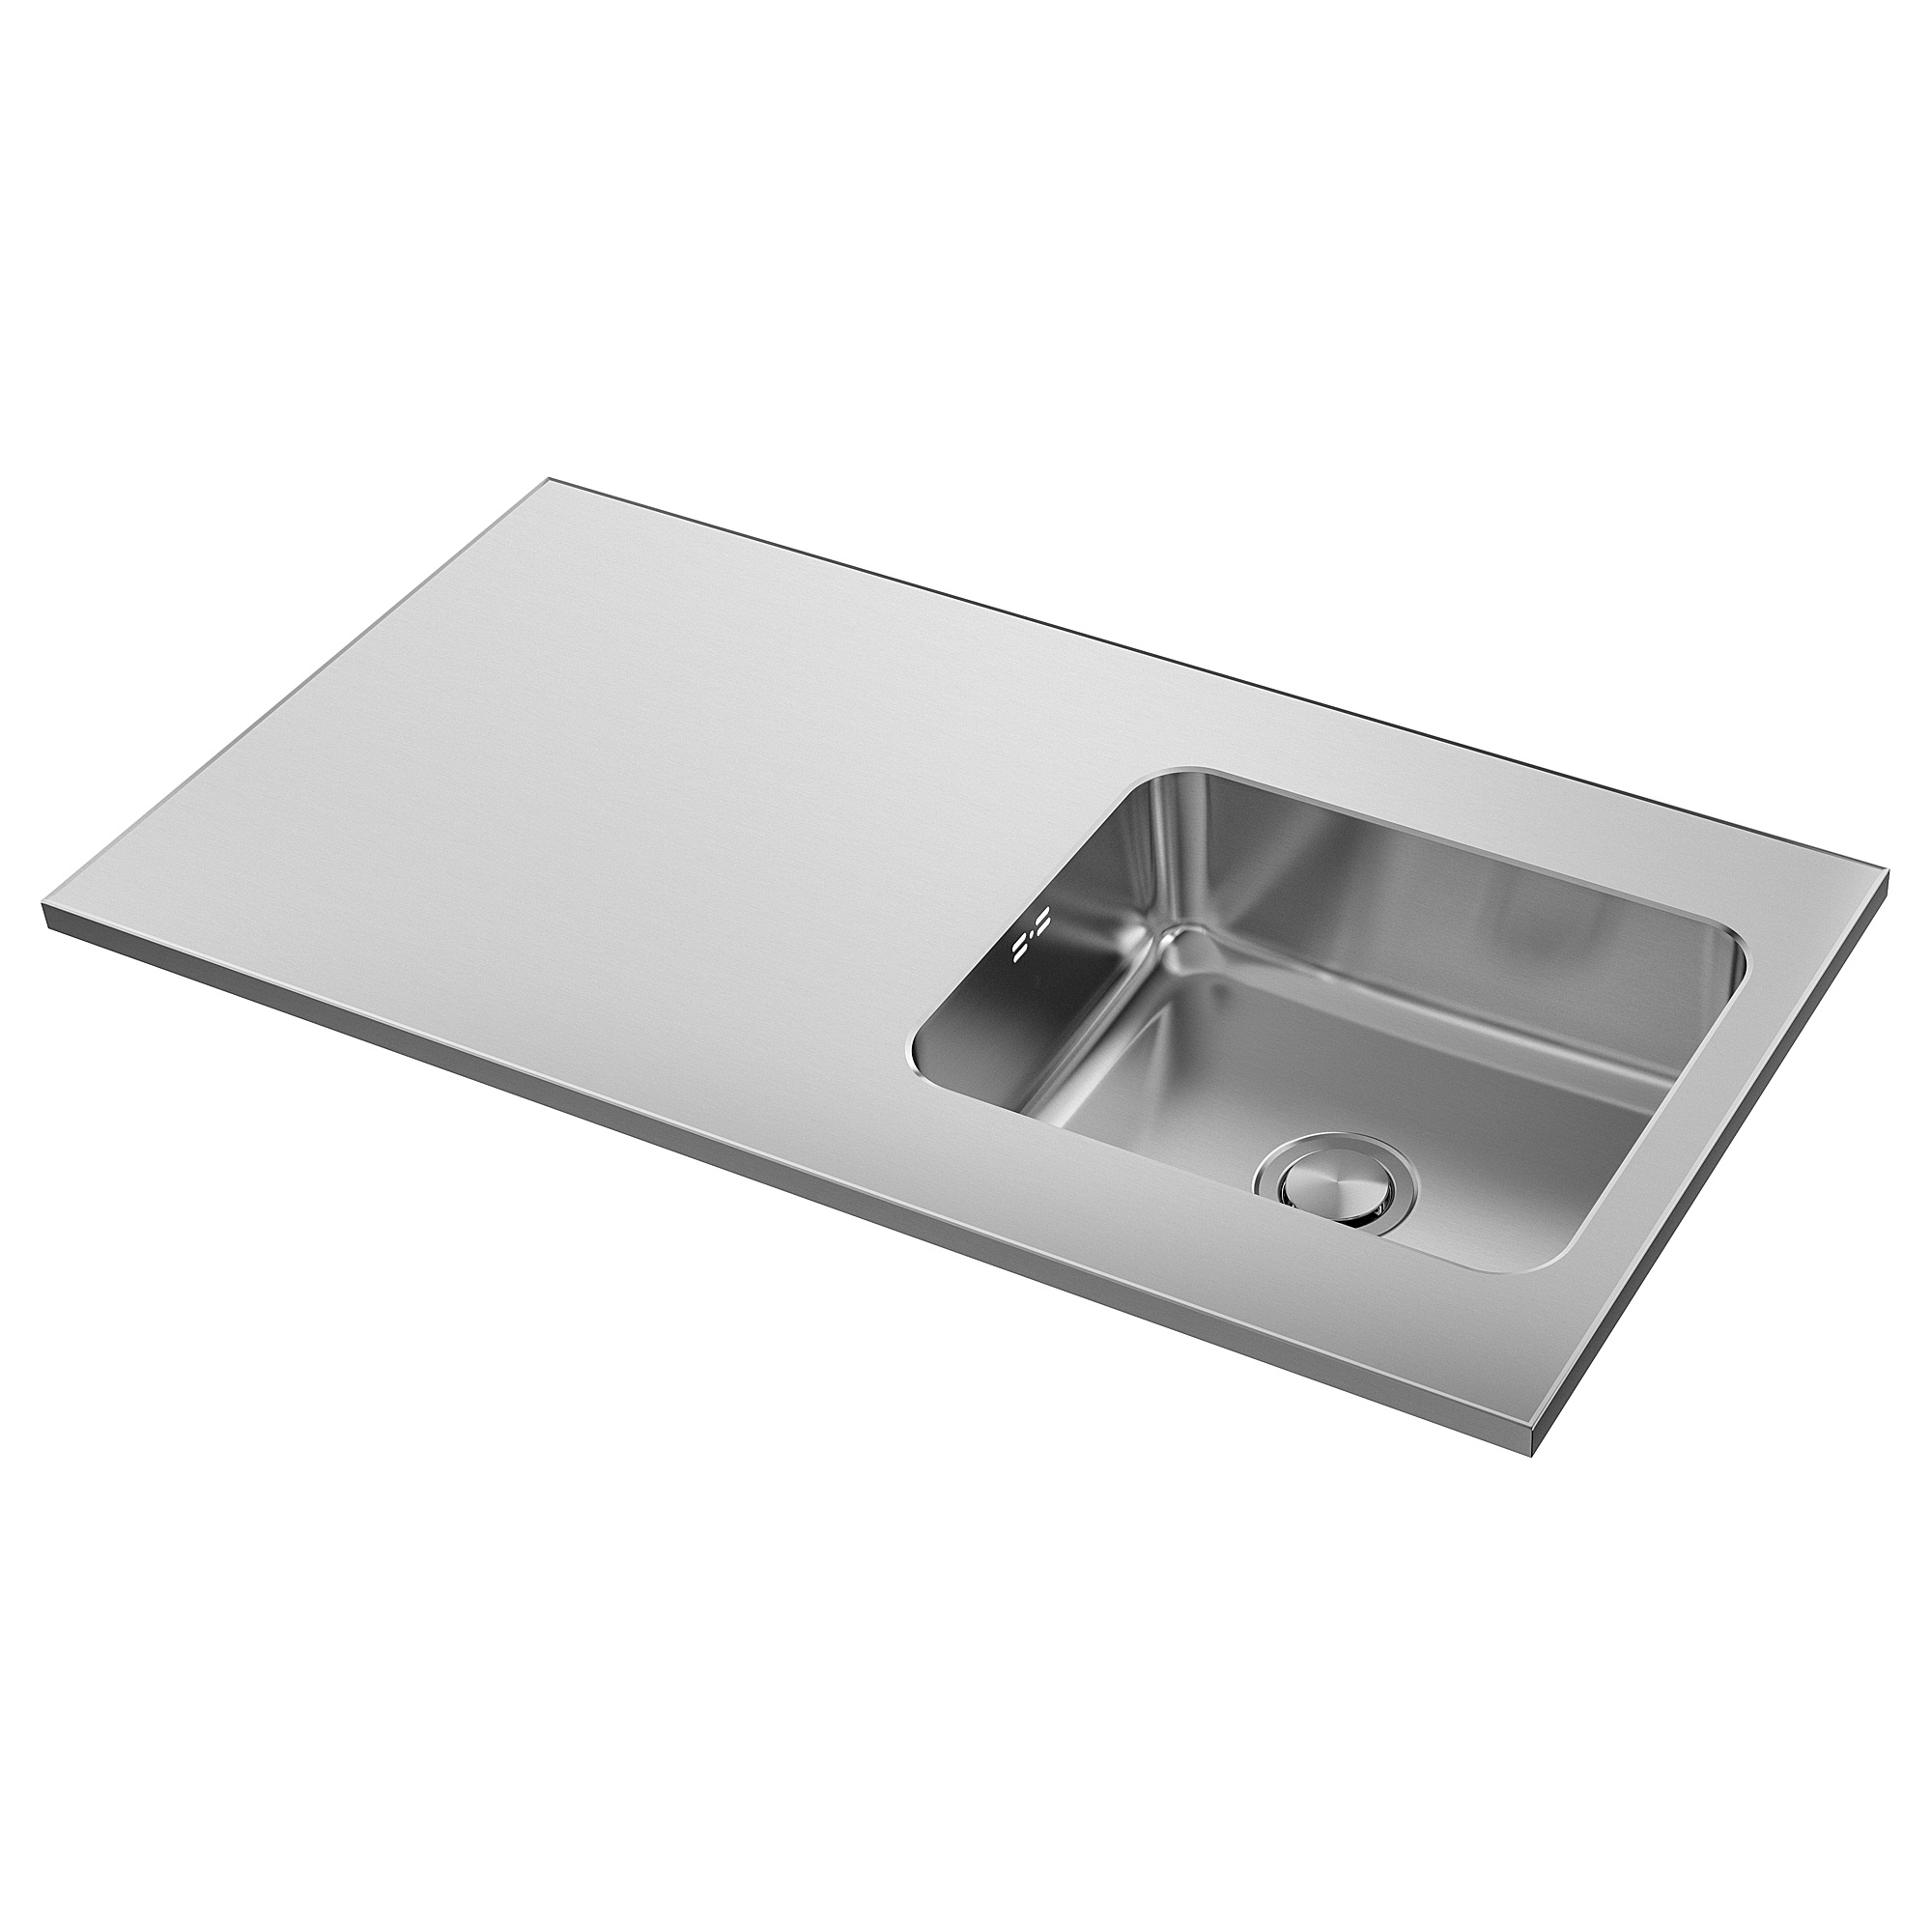 OLOFSJÖN worktop with 1 integrated sink